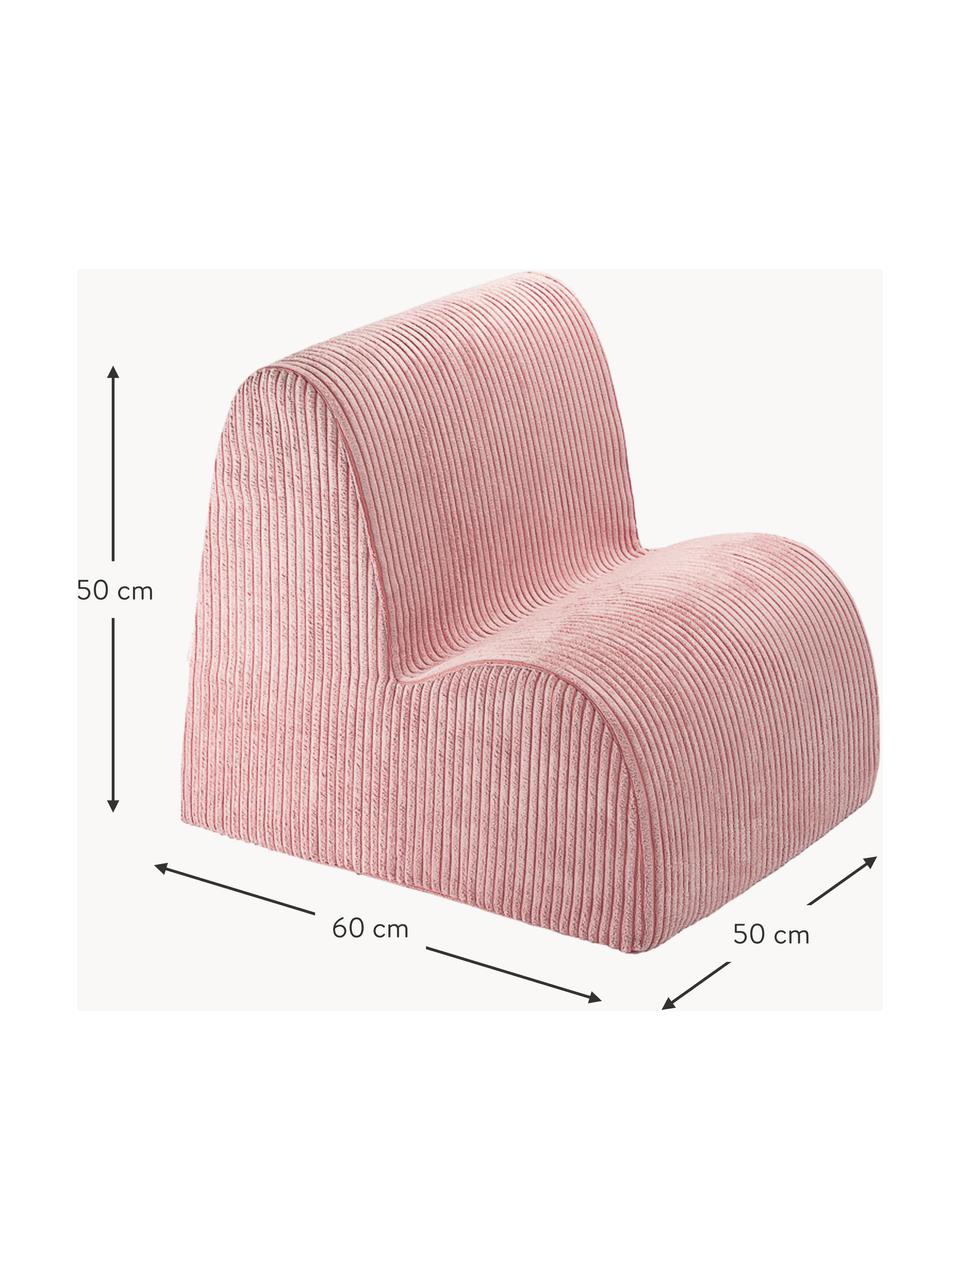 Sedia per bambini in velluto a coste Cloud, Rivestimento: velluto a coste (100% pol, Velluto a coste rosa cipria, Larg. 50 x Alt. 50 cm